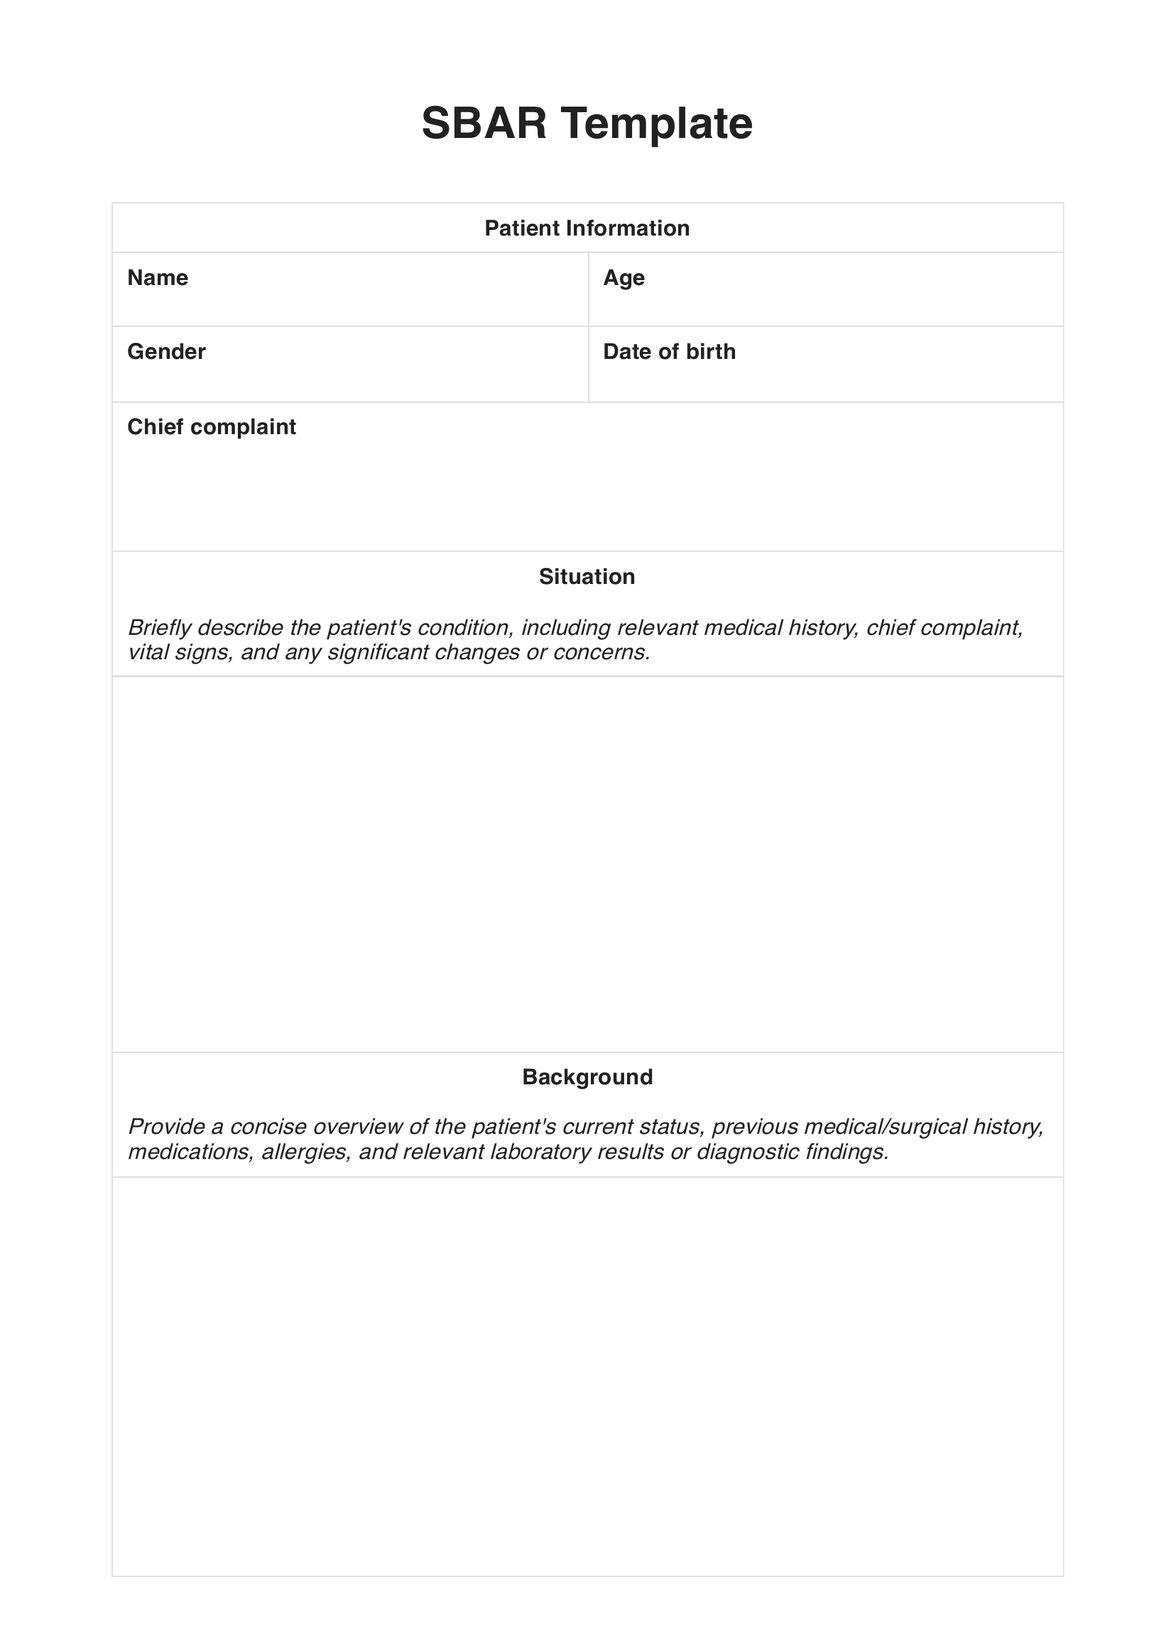 SBAR templates PDF Example